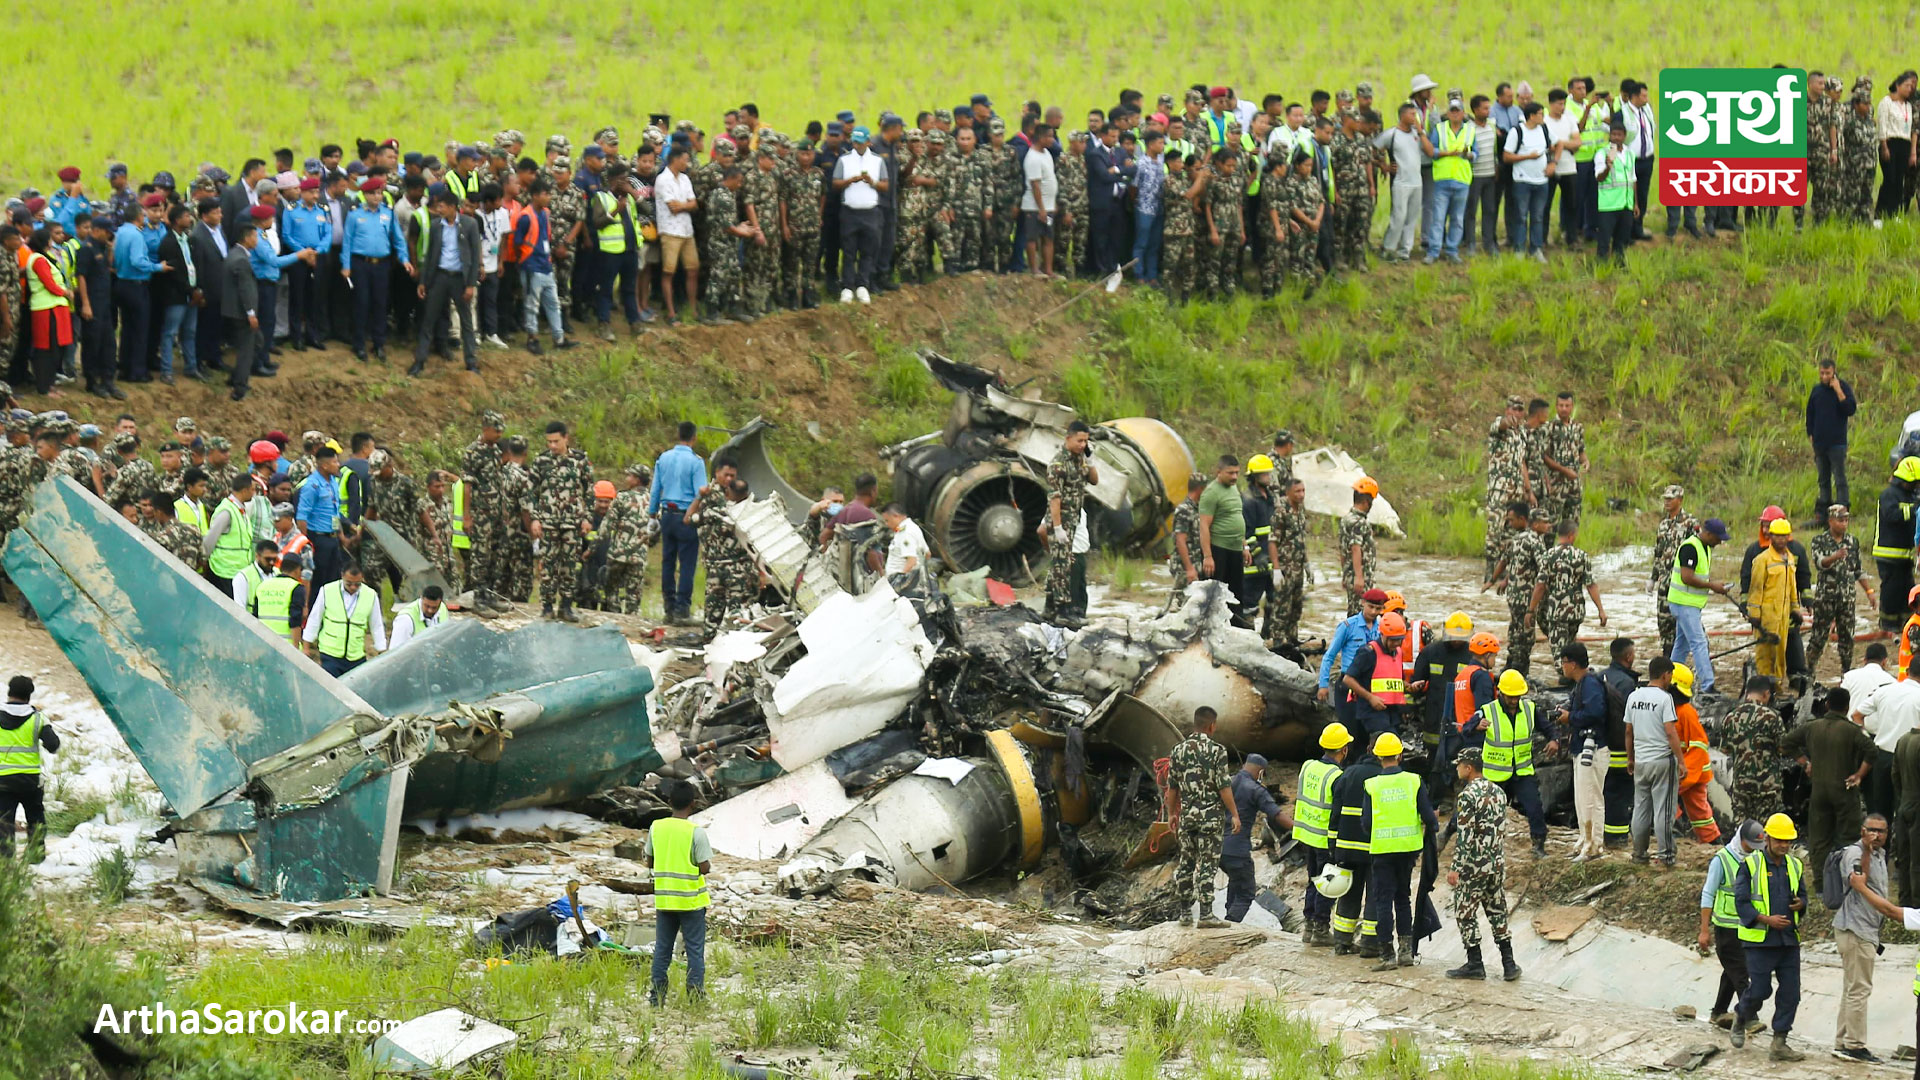 Saurya Air plane crashes at TIA